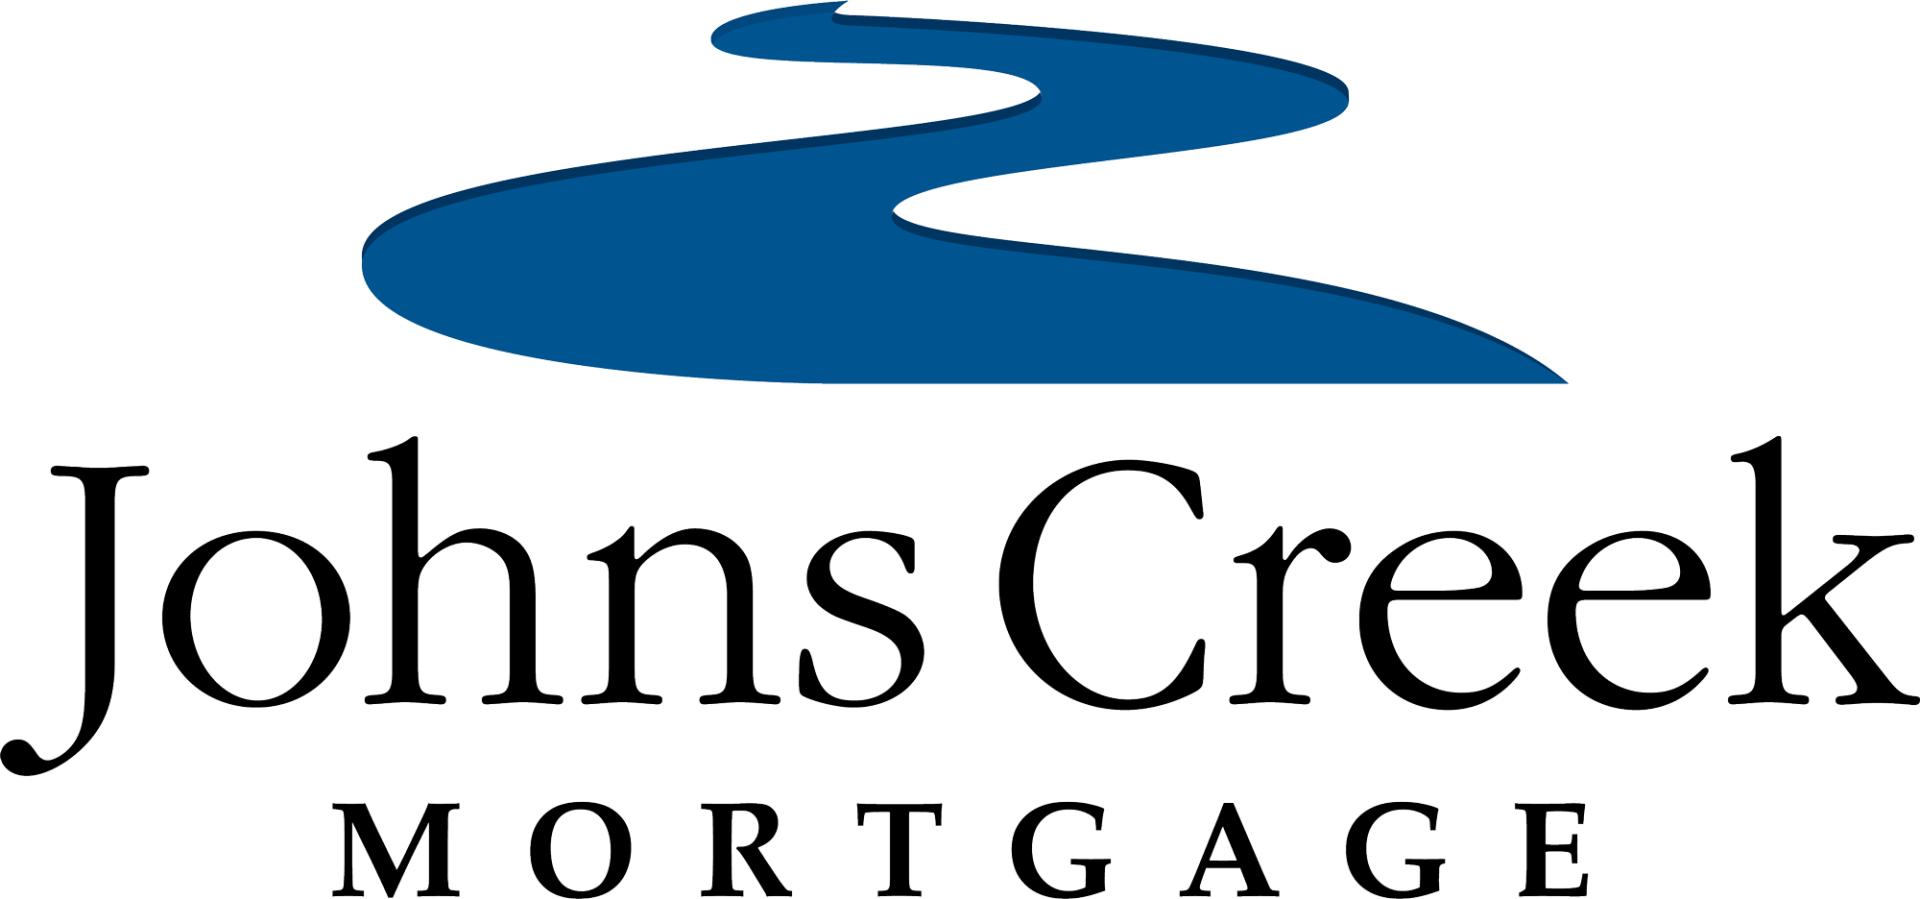 Johns Creek Mortgage LLC